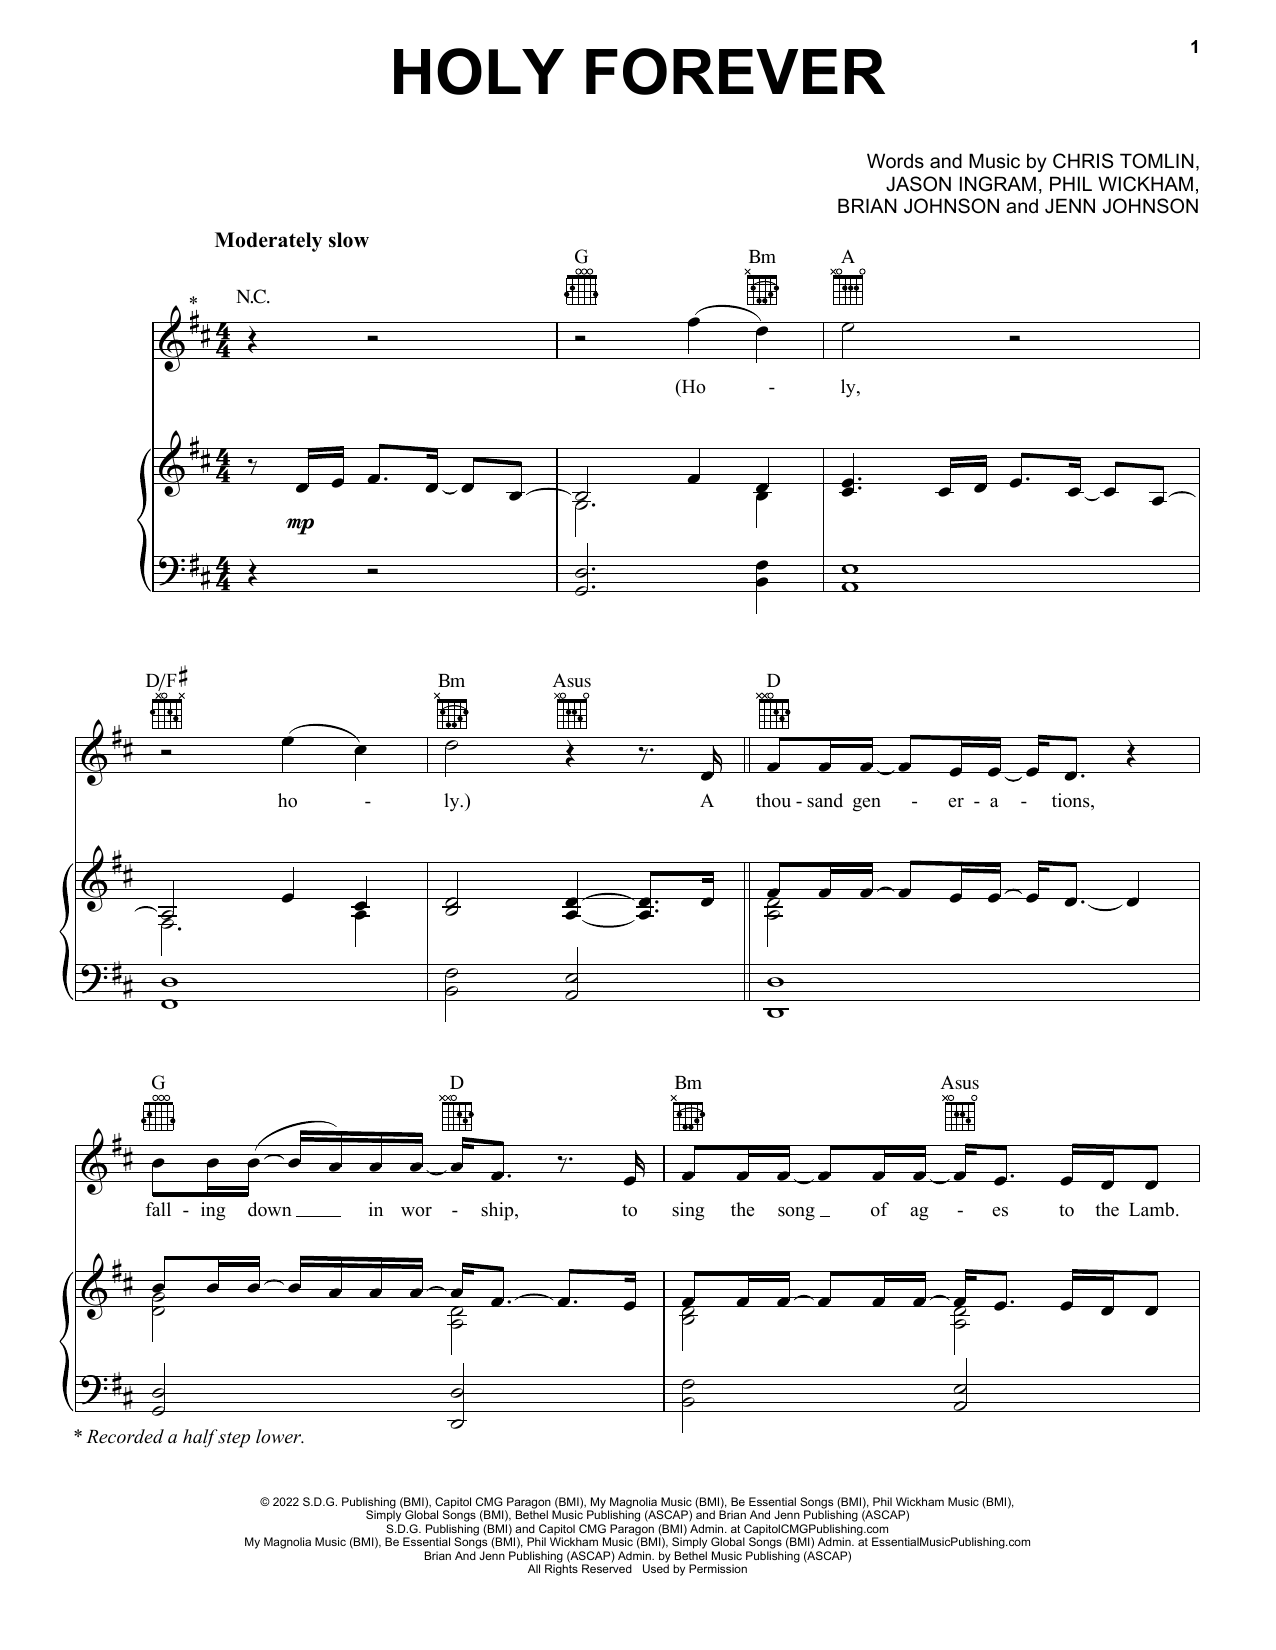 Chris Tomlin Holy Forever sheet music notes printable PDF score